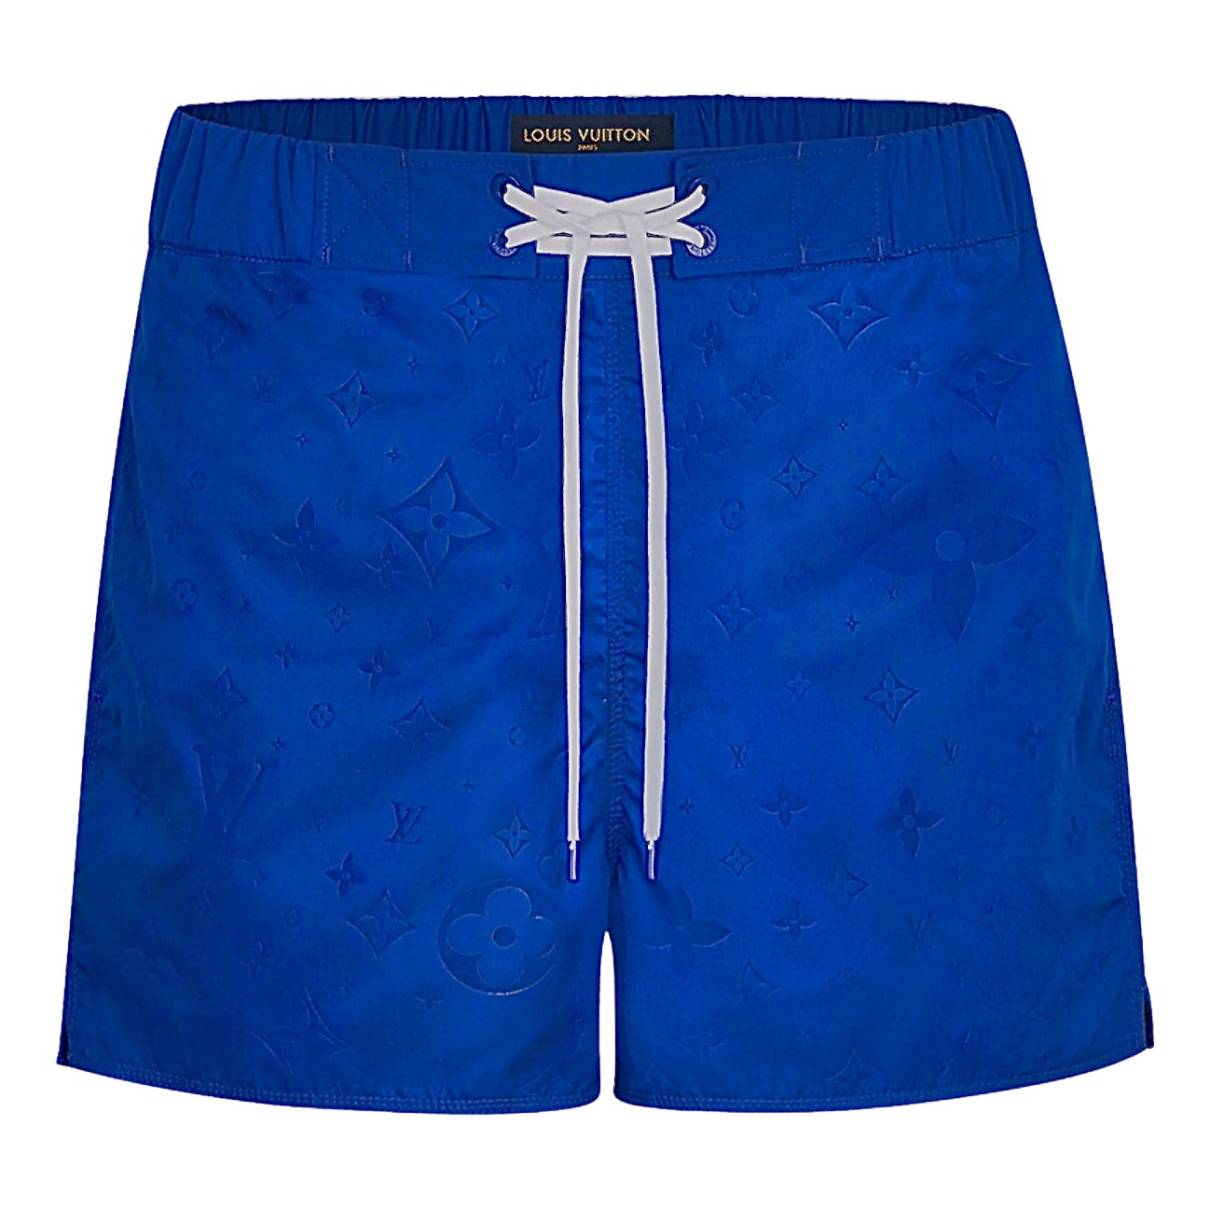 Swimwear Louis Vuitton Blue size XL International in Polyester - 29785917